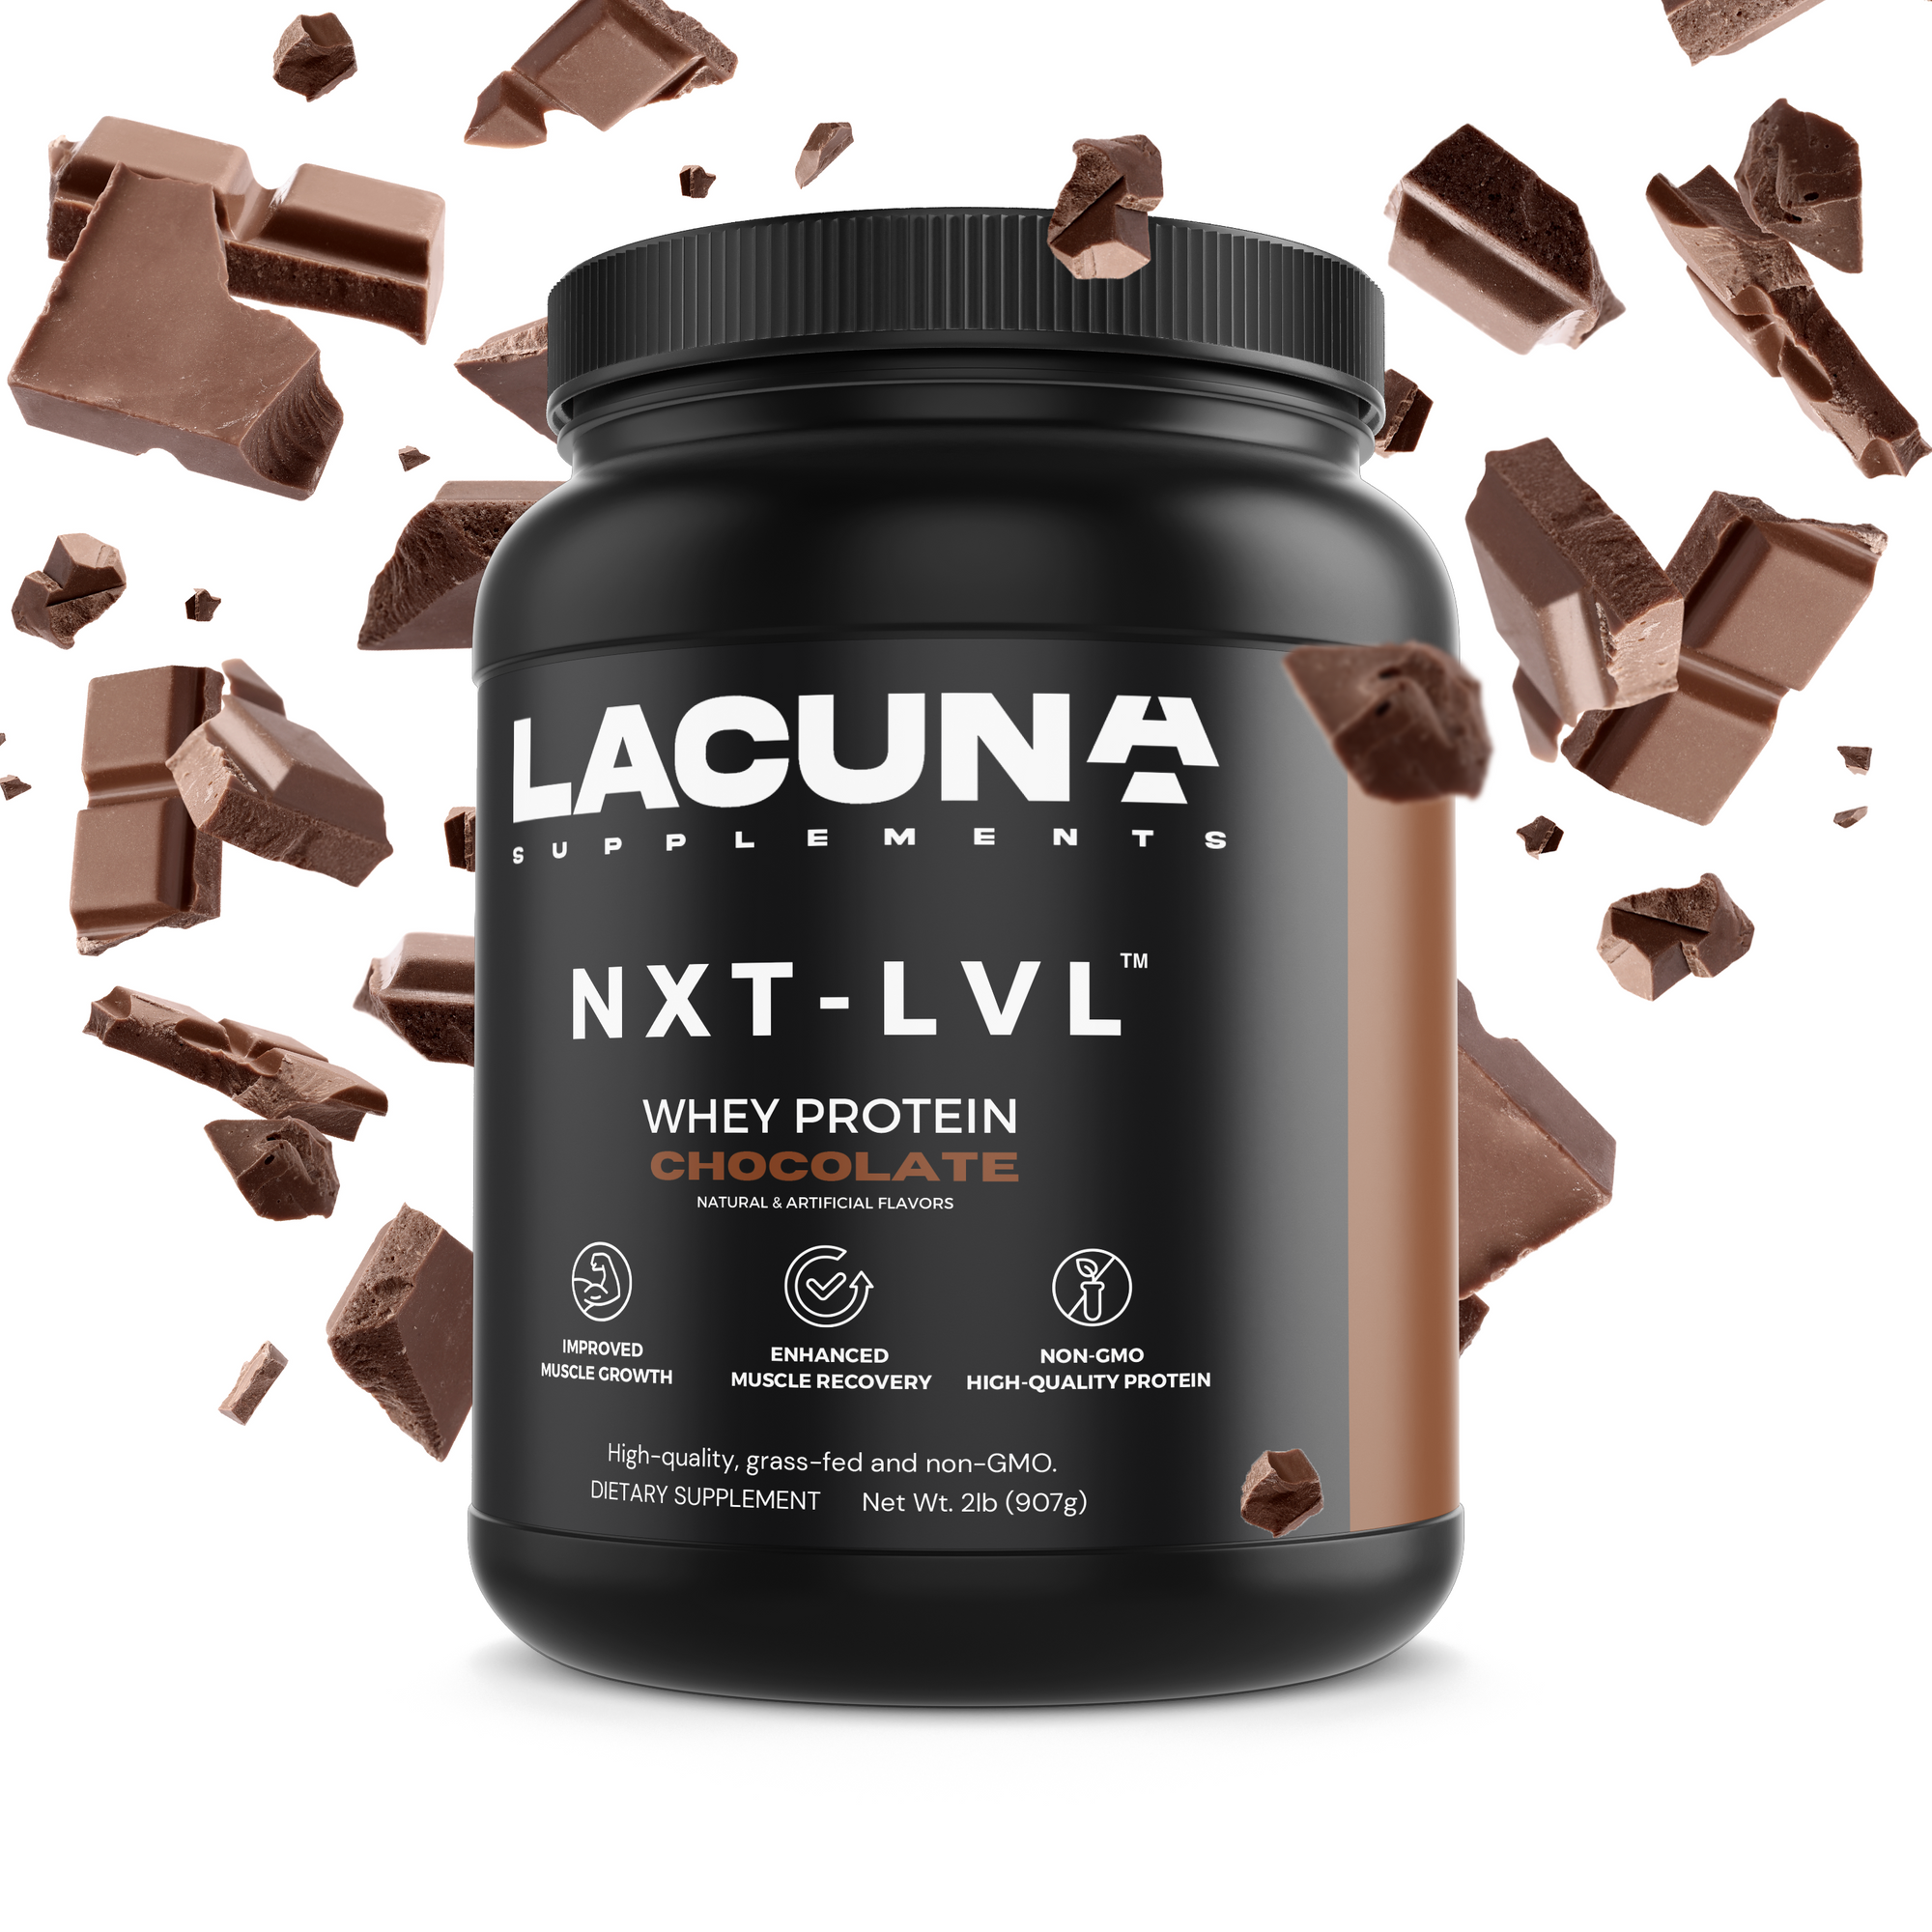 NXT-LVL Chocolate